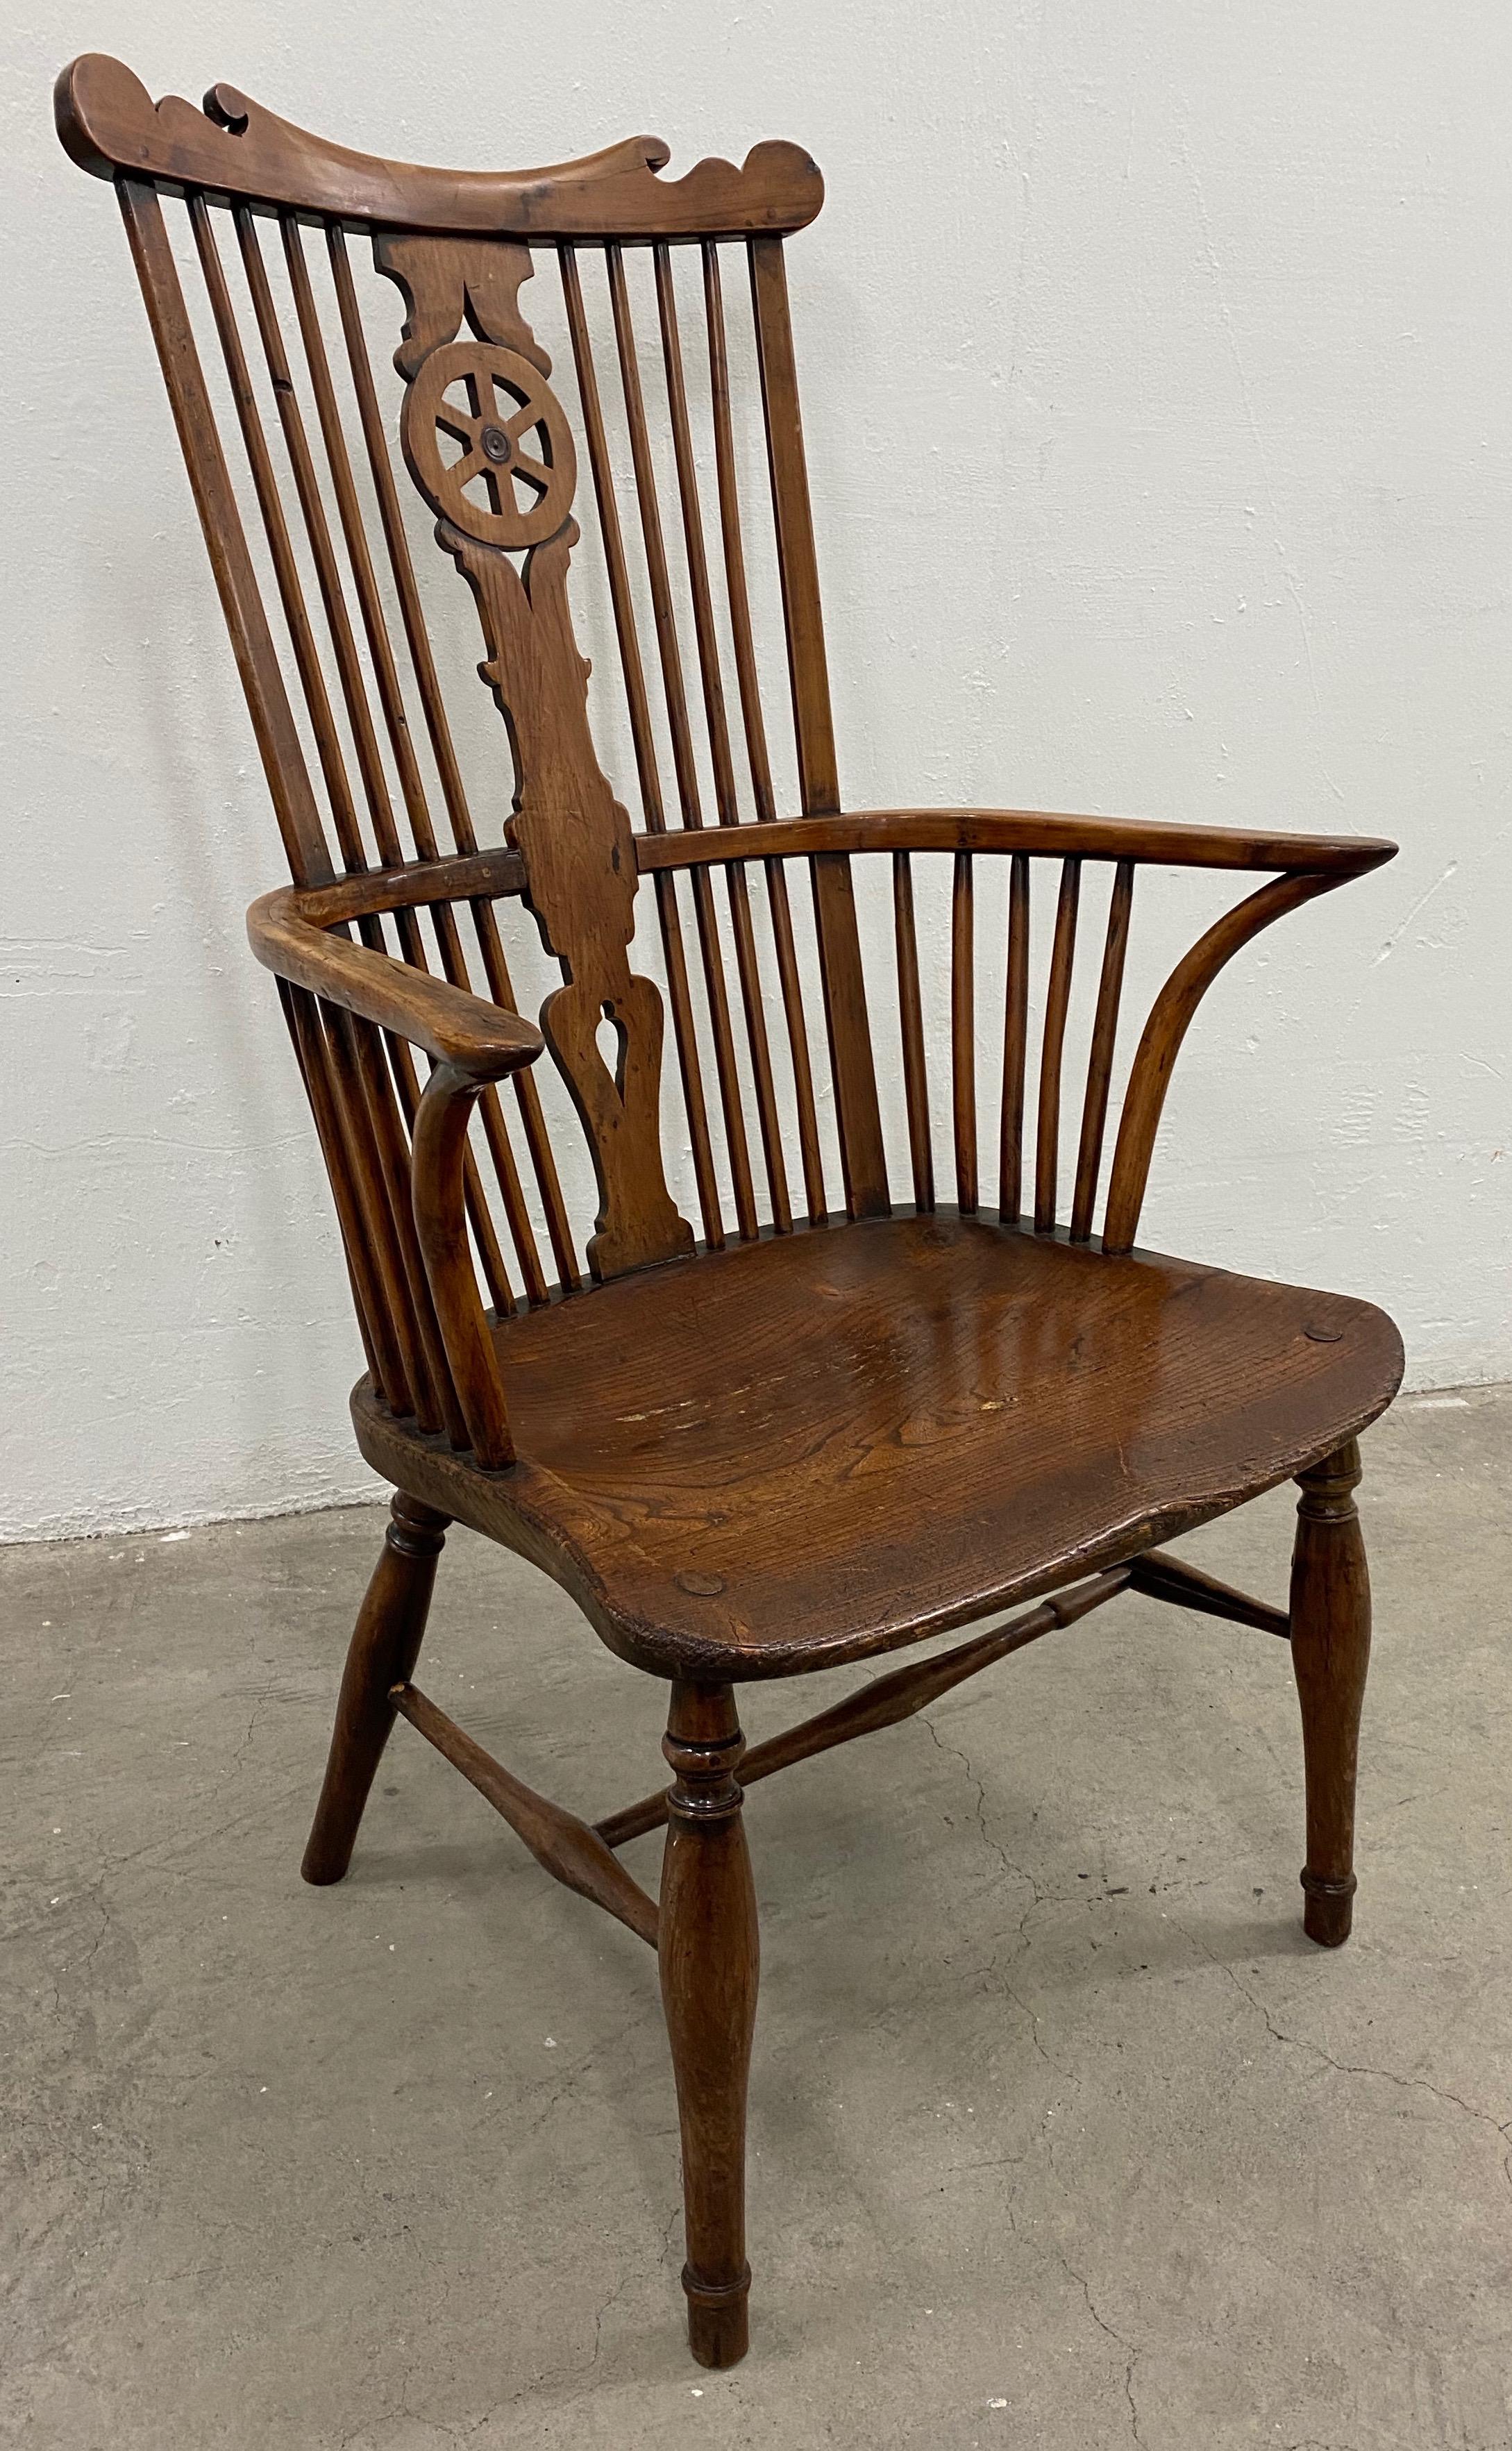 19th century European yew wood high back windsor armchair

Fine hand carved custom made high back Windsor armchair. The chair is made from solid European (common) Yew wood.

The chair measures 26.5